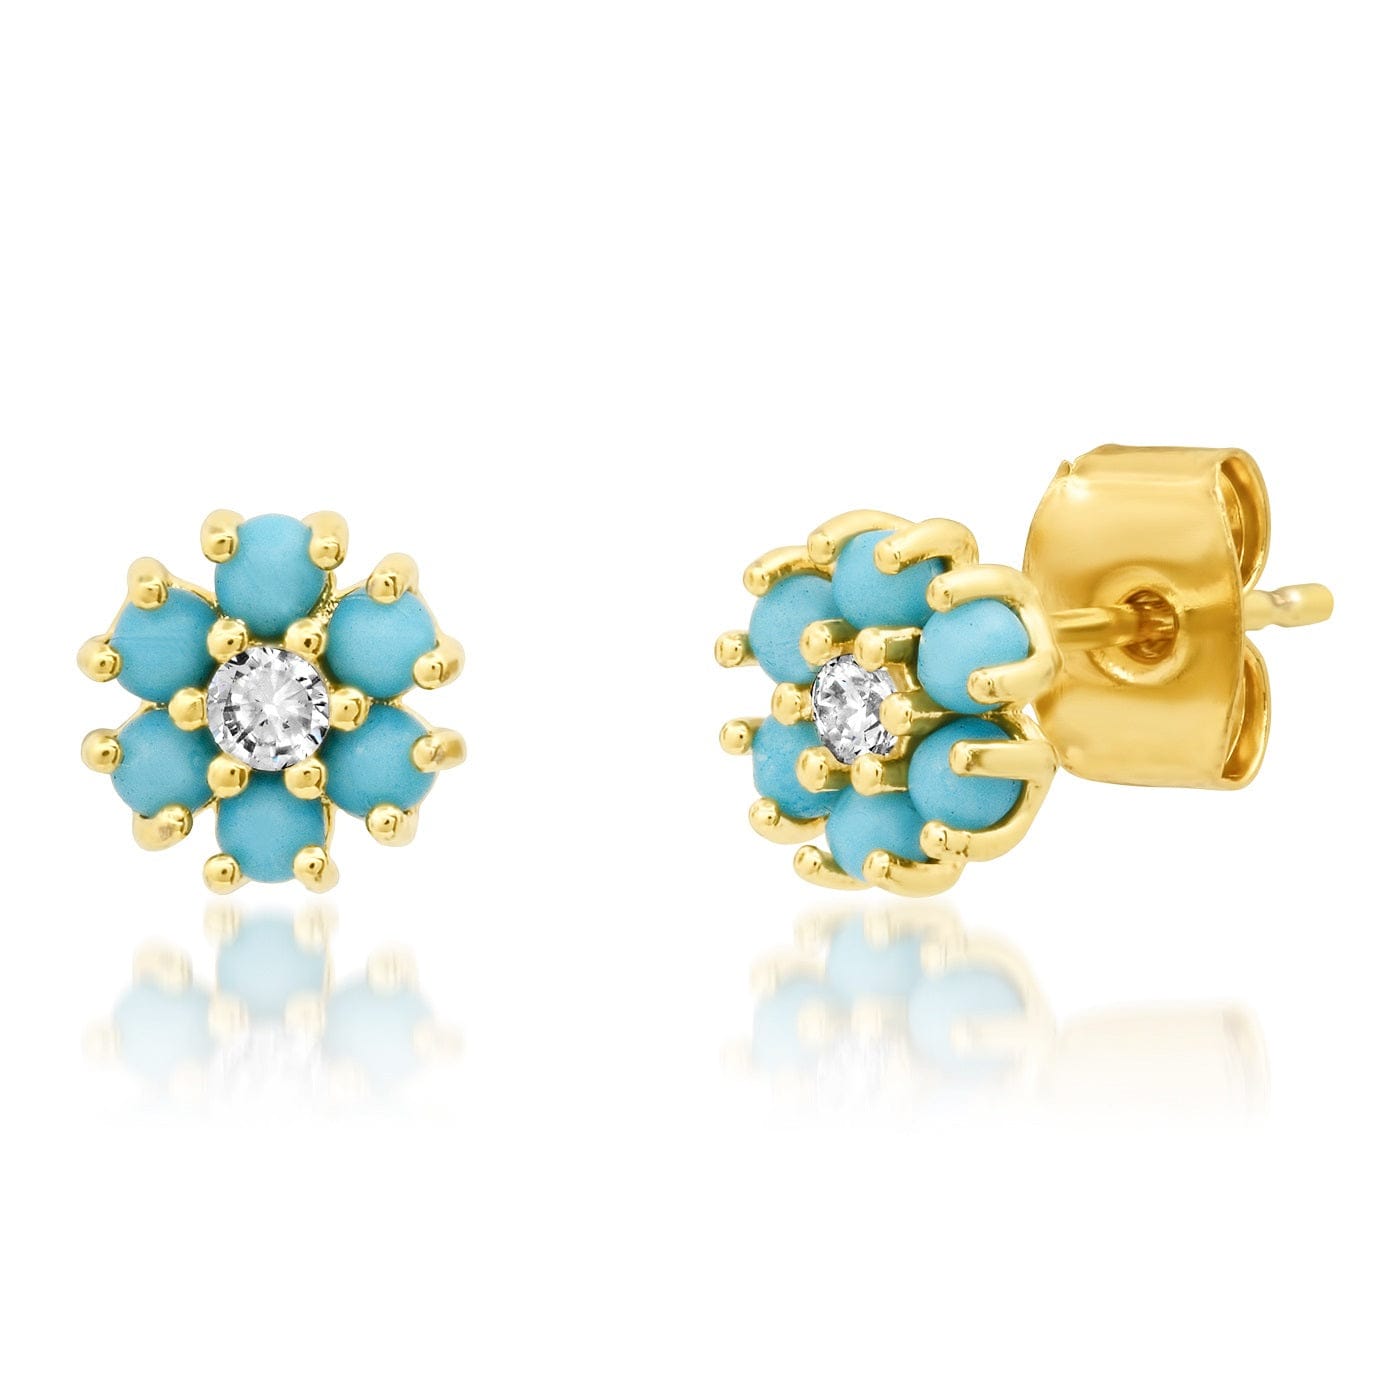 TAI JEWELRY Earrings Turquoise CZ Flower Stud With Jewel Tone Center Stone